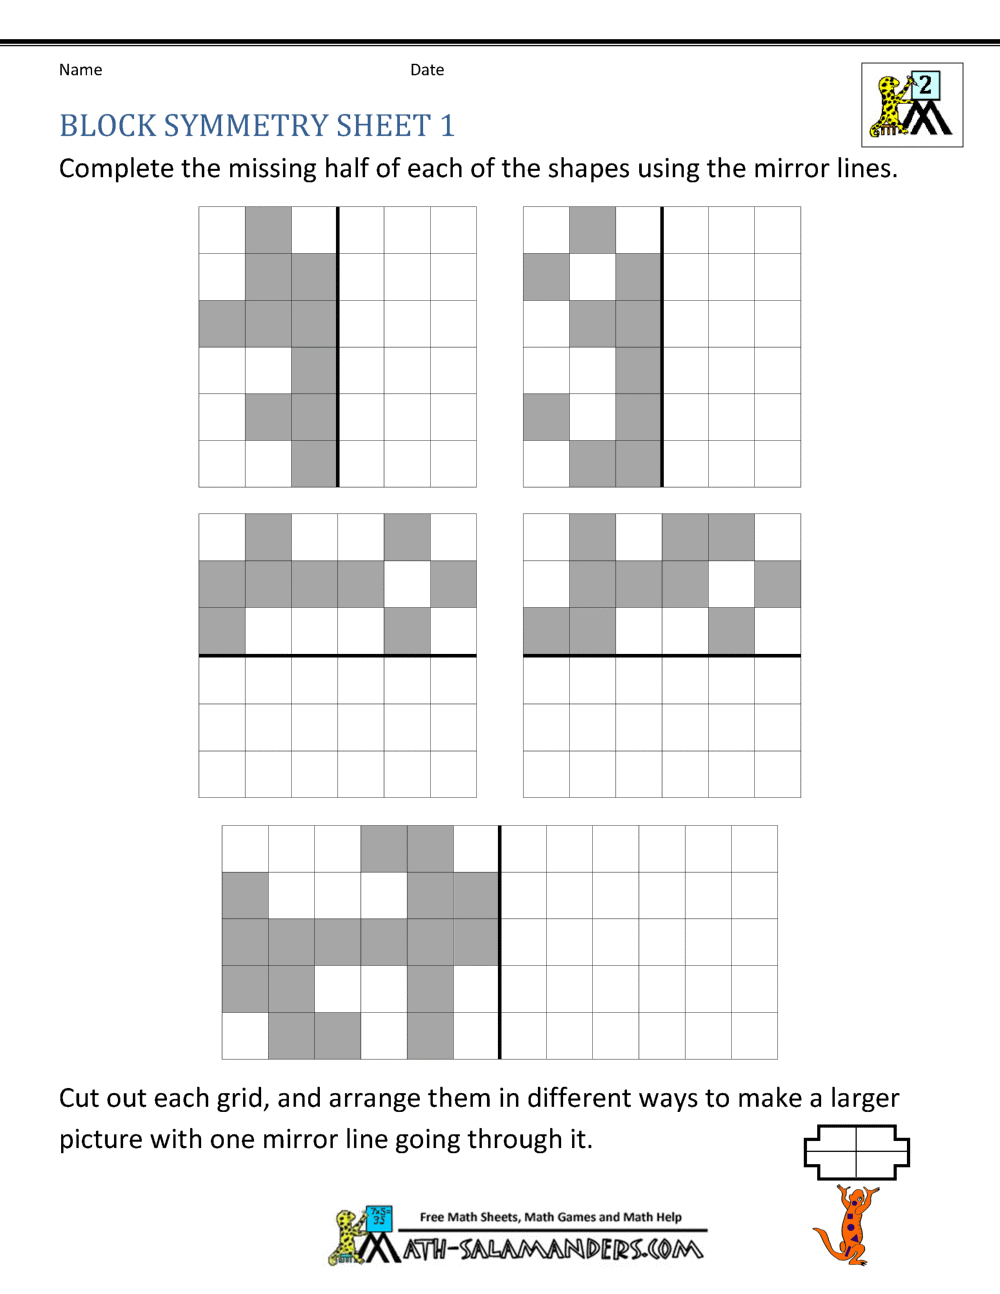 https://www.math-salamanders.com/image-files/math-symmetry-block-symmetry-1.gif